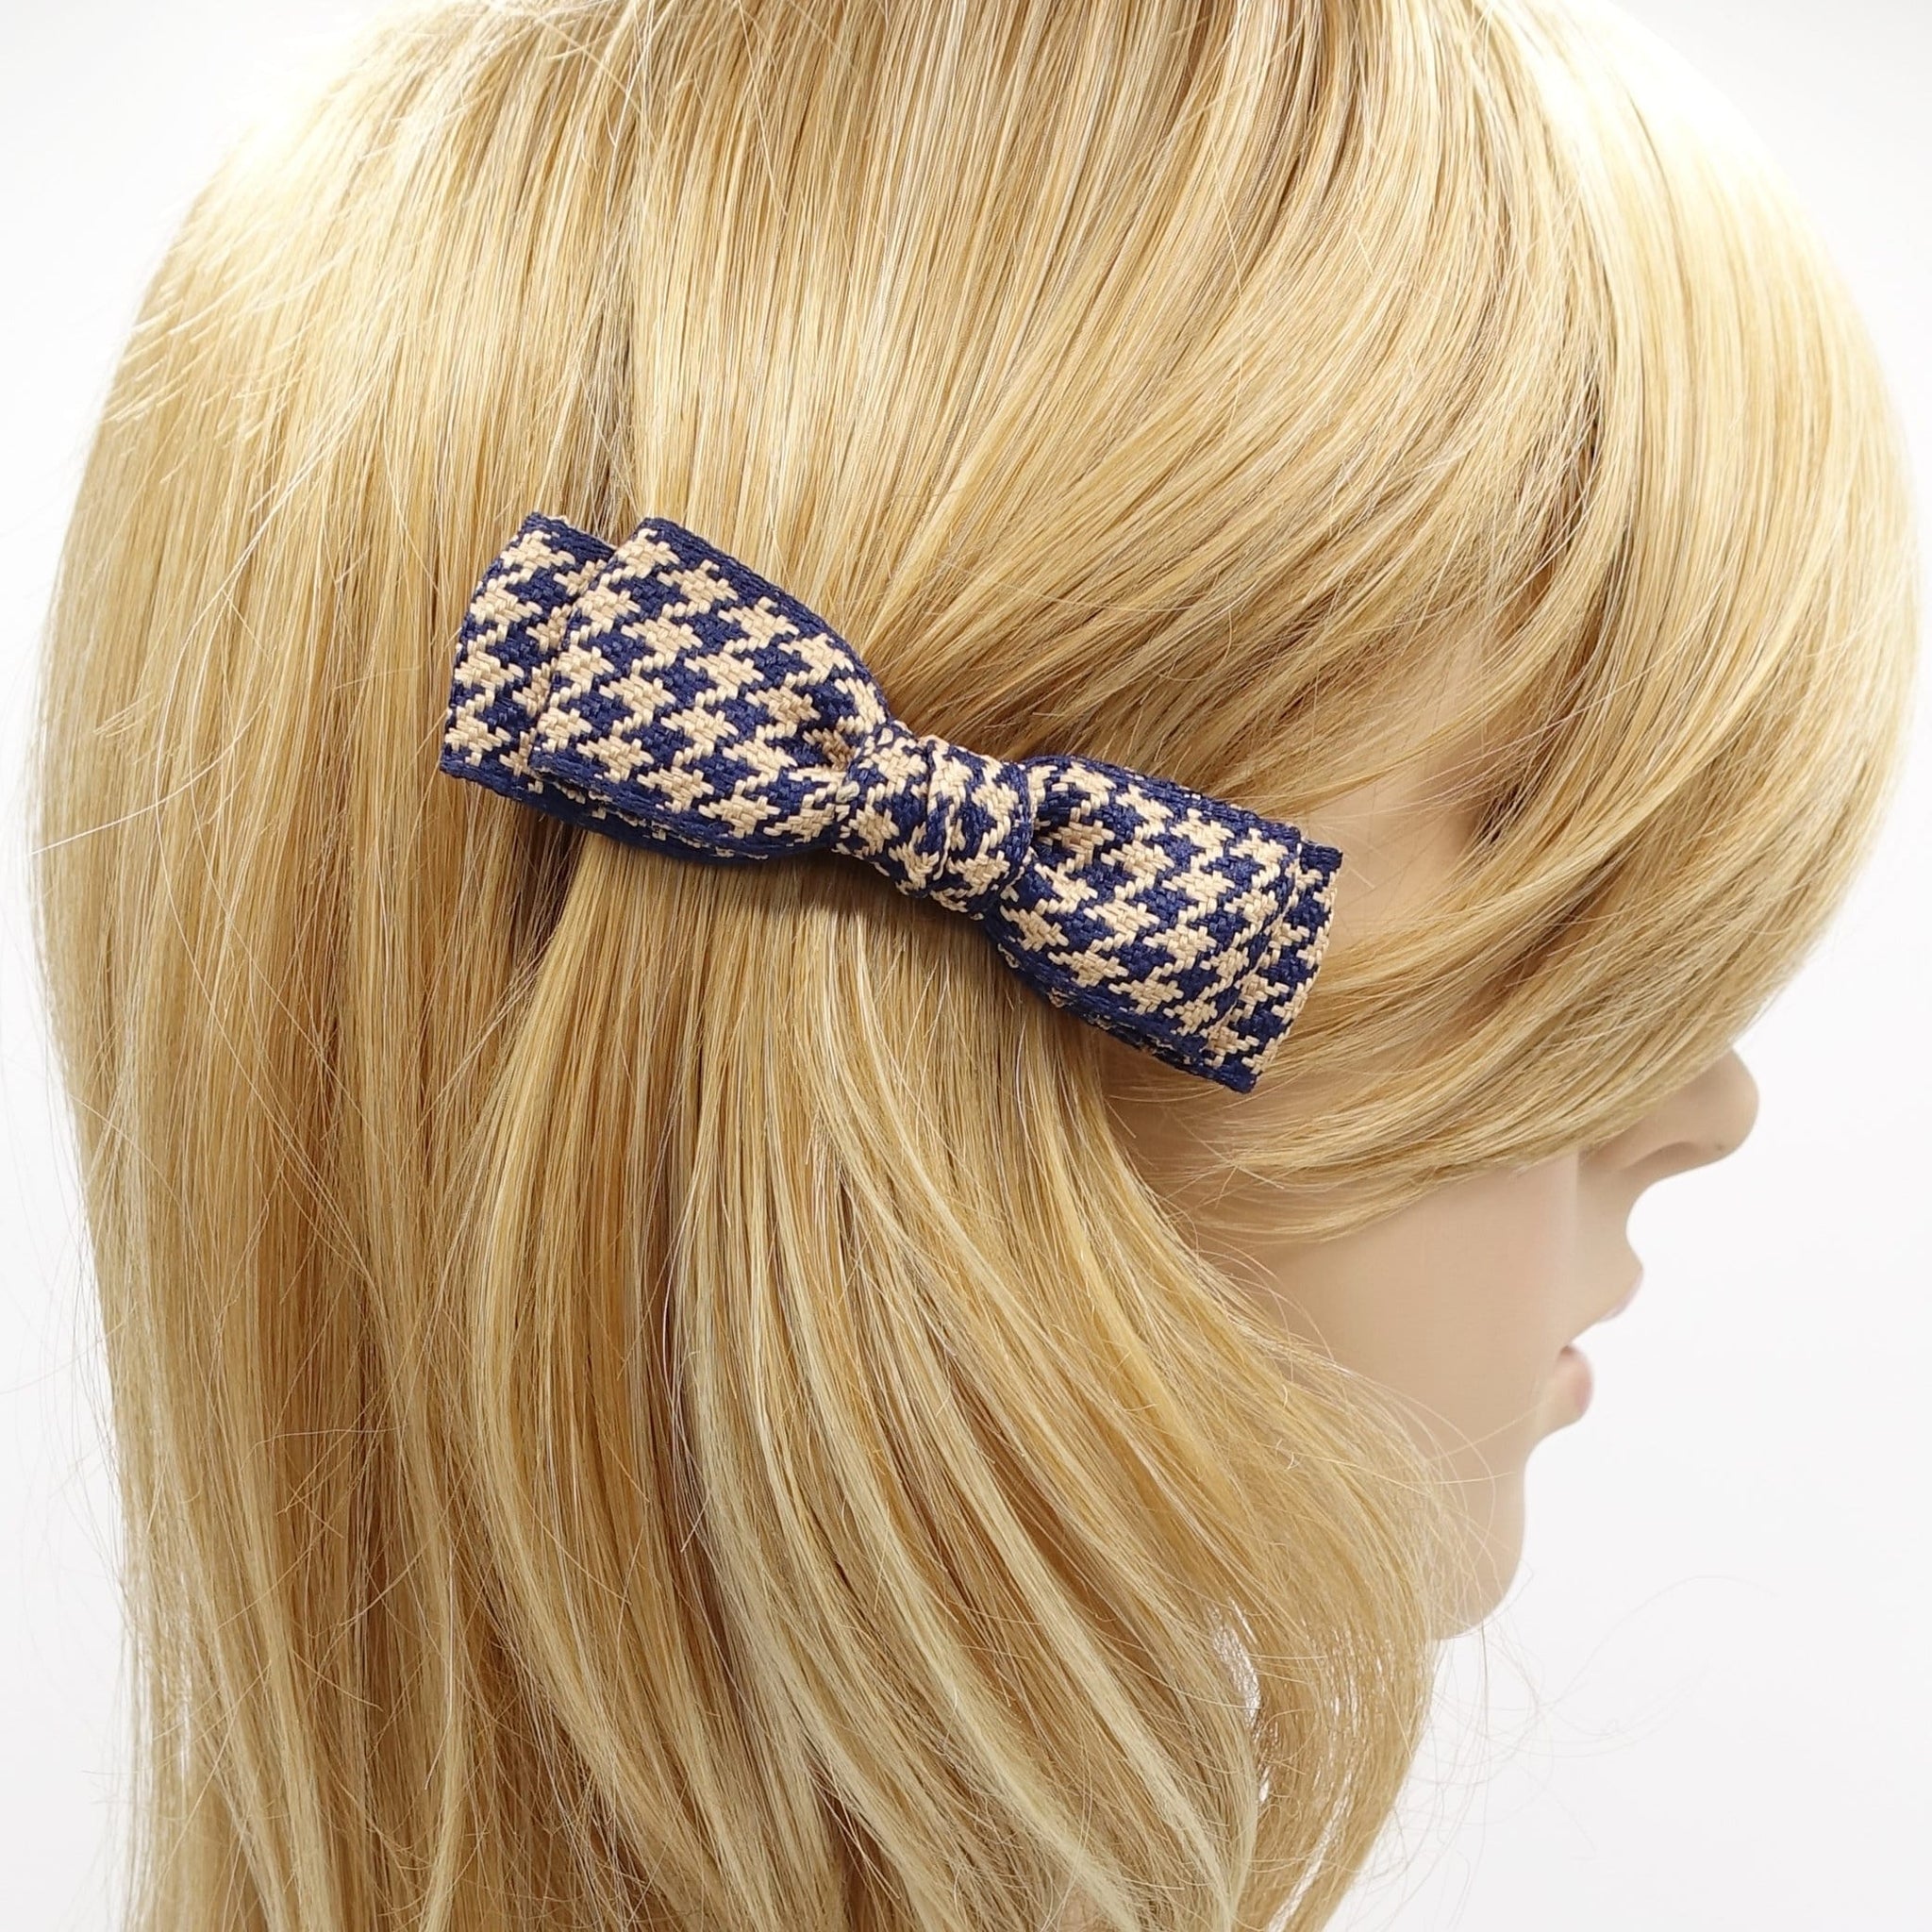 veryshine.com Barrette (Bow) basic navy houndstooth hair bows for women